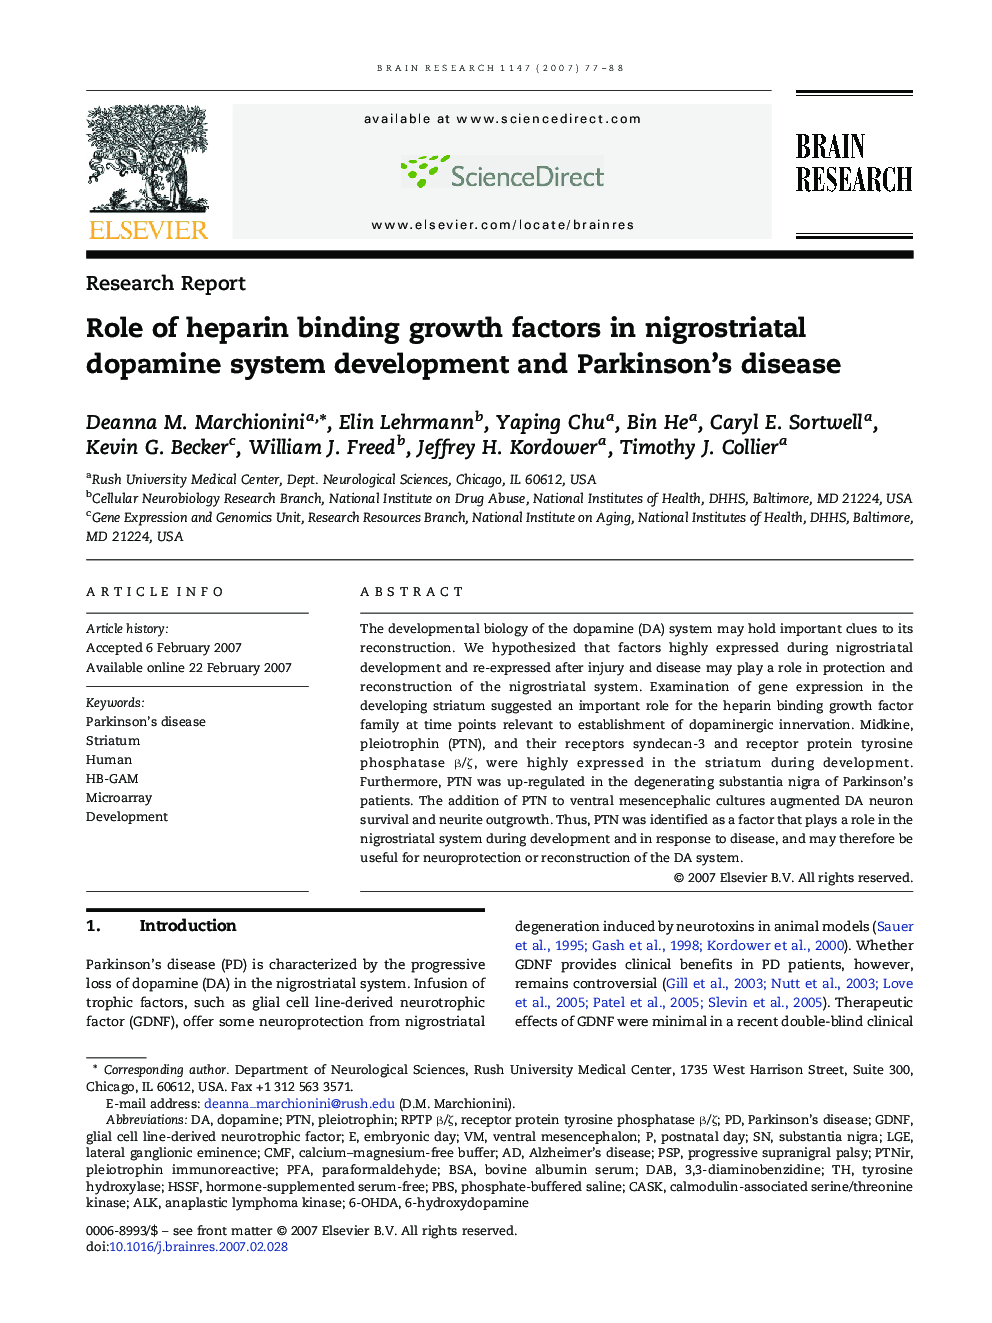 Role of heparin binding growth factors in nigrostriatal dopamine system development and Parkinson's disease